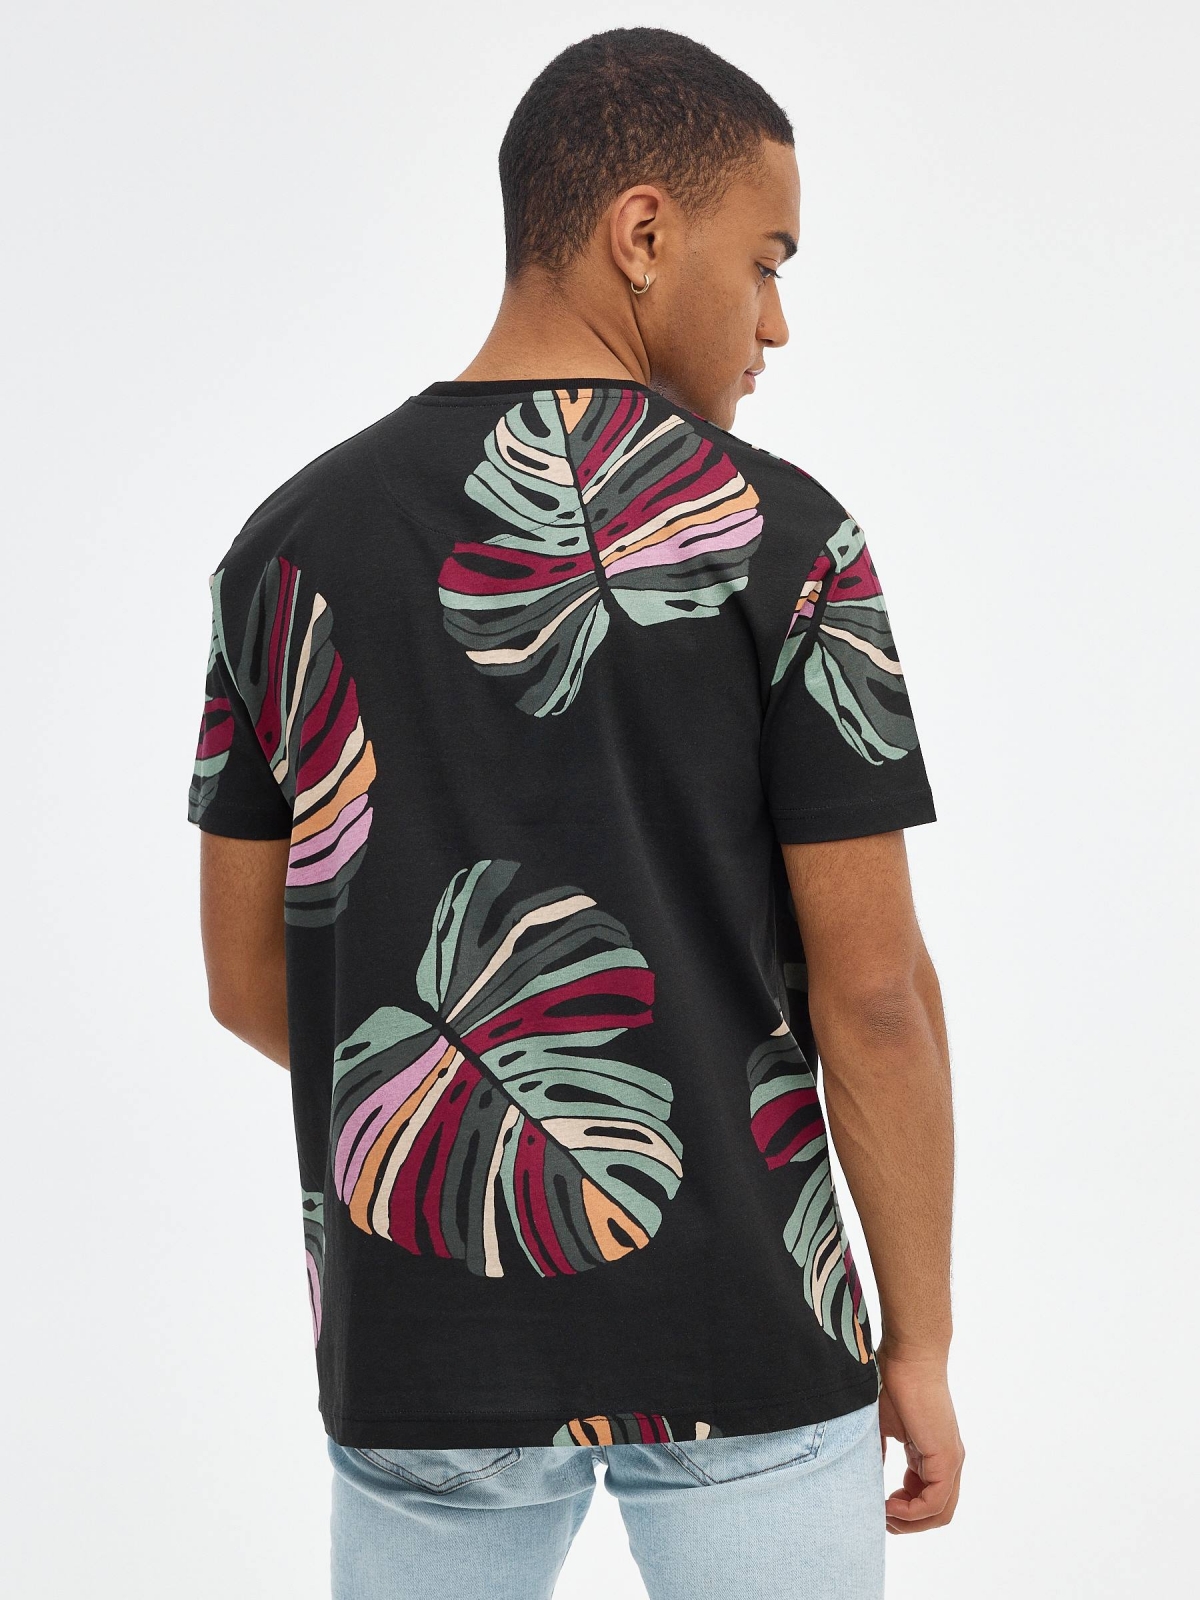 Camiseta print hojas multicolor negro vista media trasera